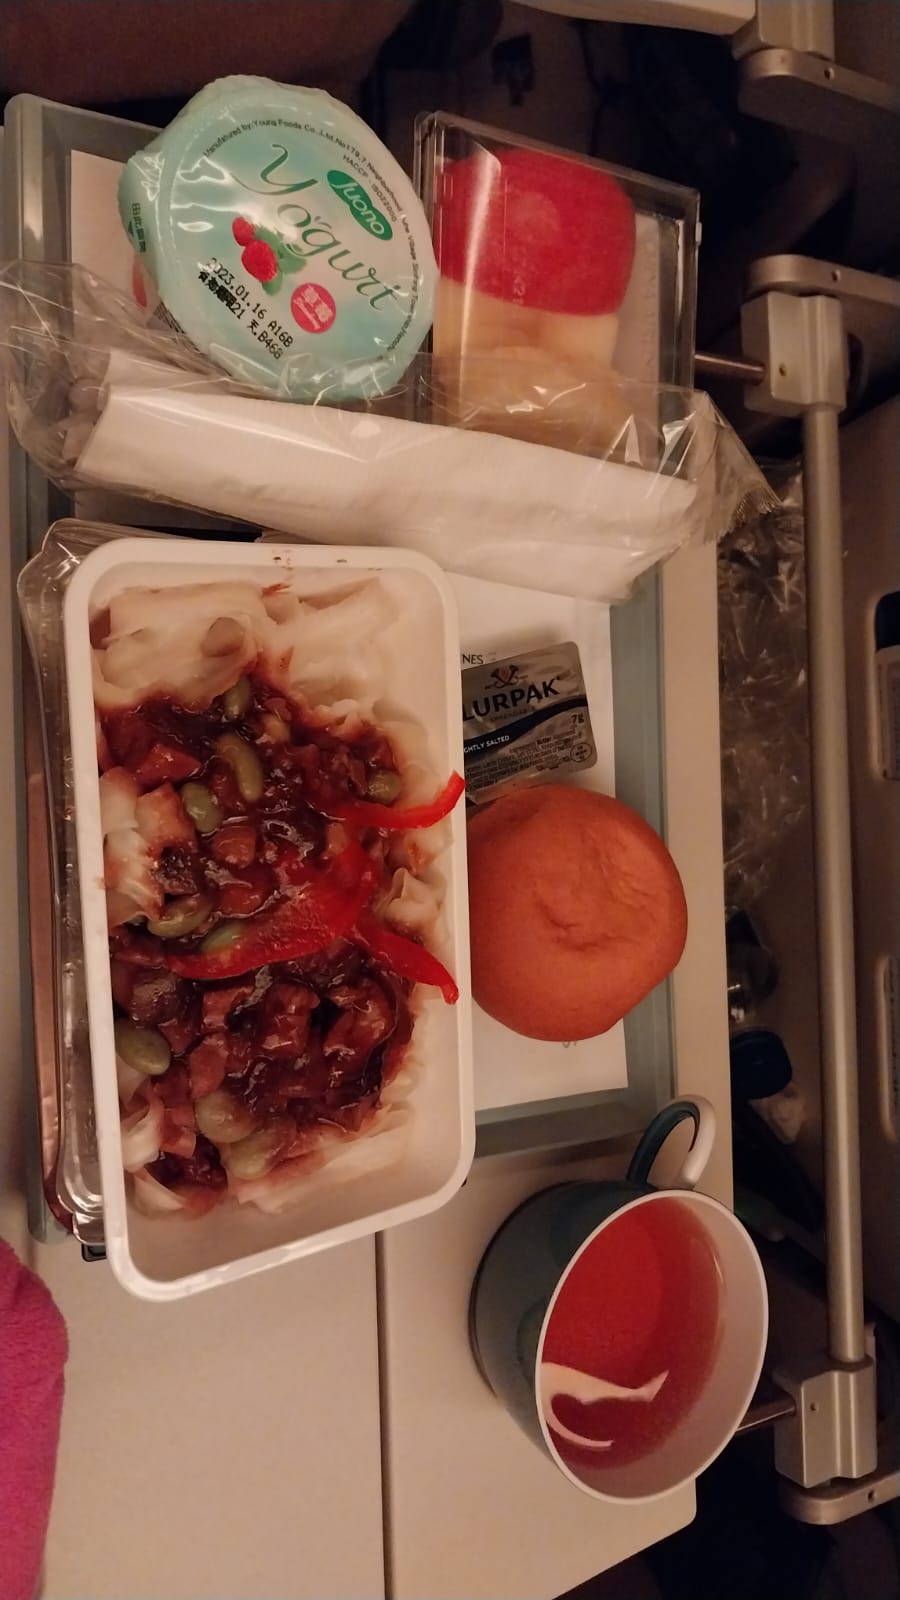 Makanan di dalam pesawat